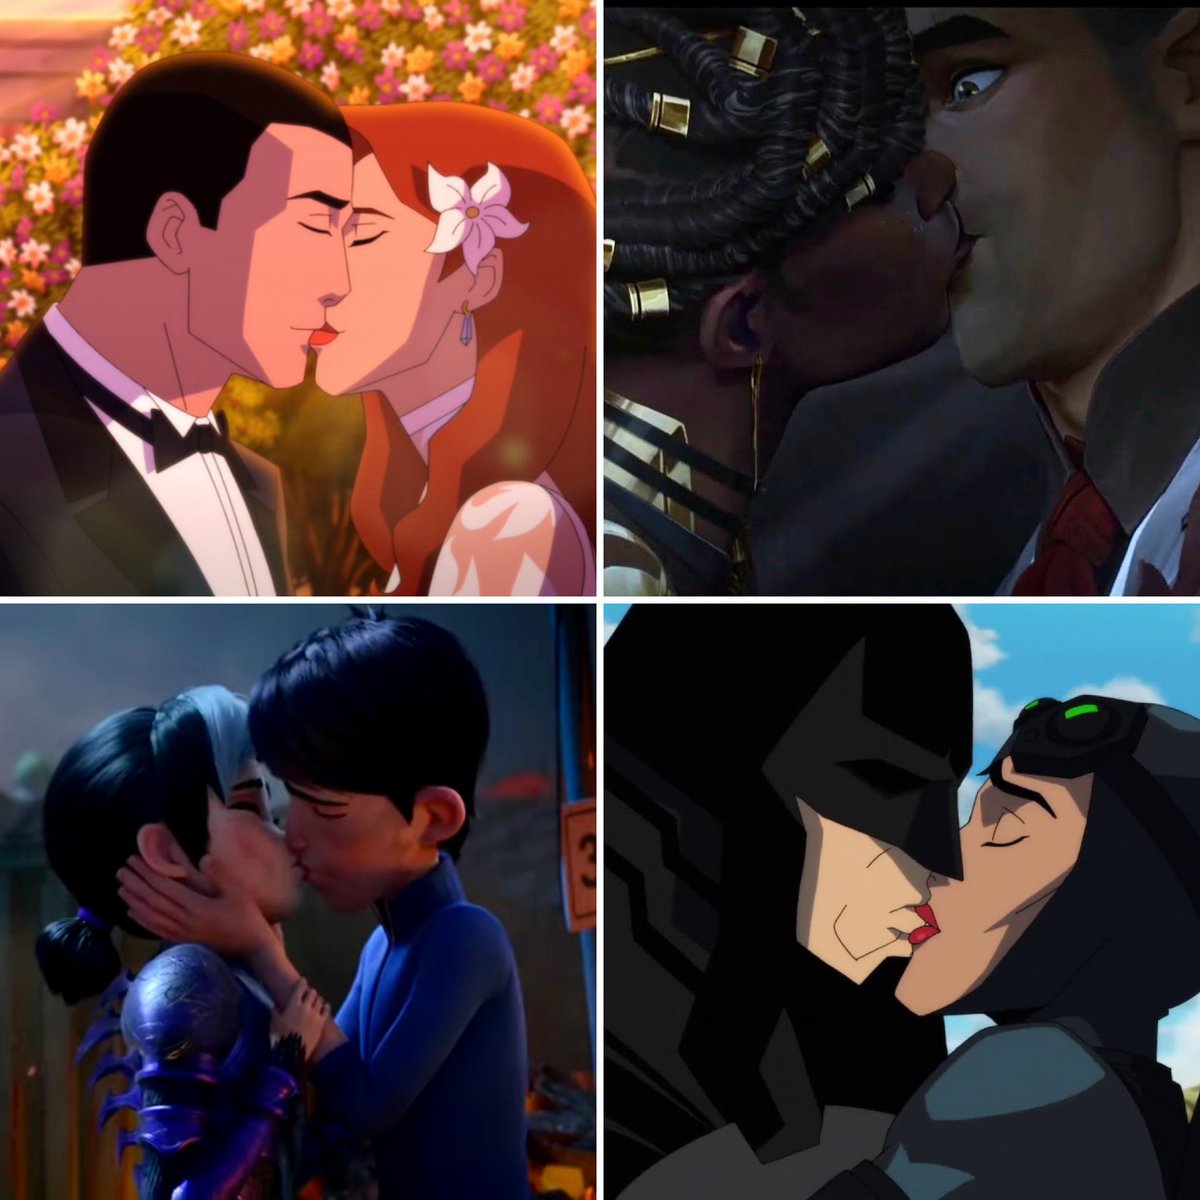 Best Kisses of the Year 😘 #InternationalKissingDay
❤️
💛
💚
#Animation #AnimationIsNotAGenre #YoungJustice #Superboy #MissMartian #Arcane #Trollhunters #TrollhunterROTT #TalesOfArcadia #InjusticeGodsAmongUs #DCComics #Batman #Catwoman #KissingDay #Love #WorldKissingDay